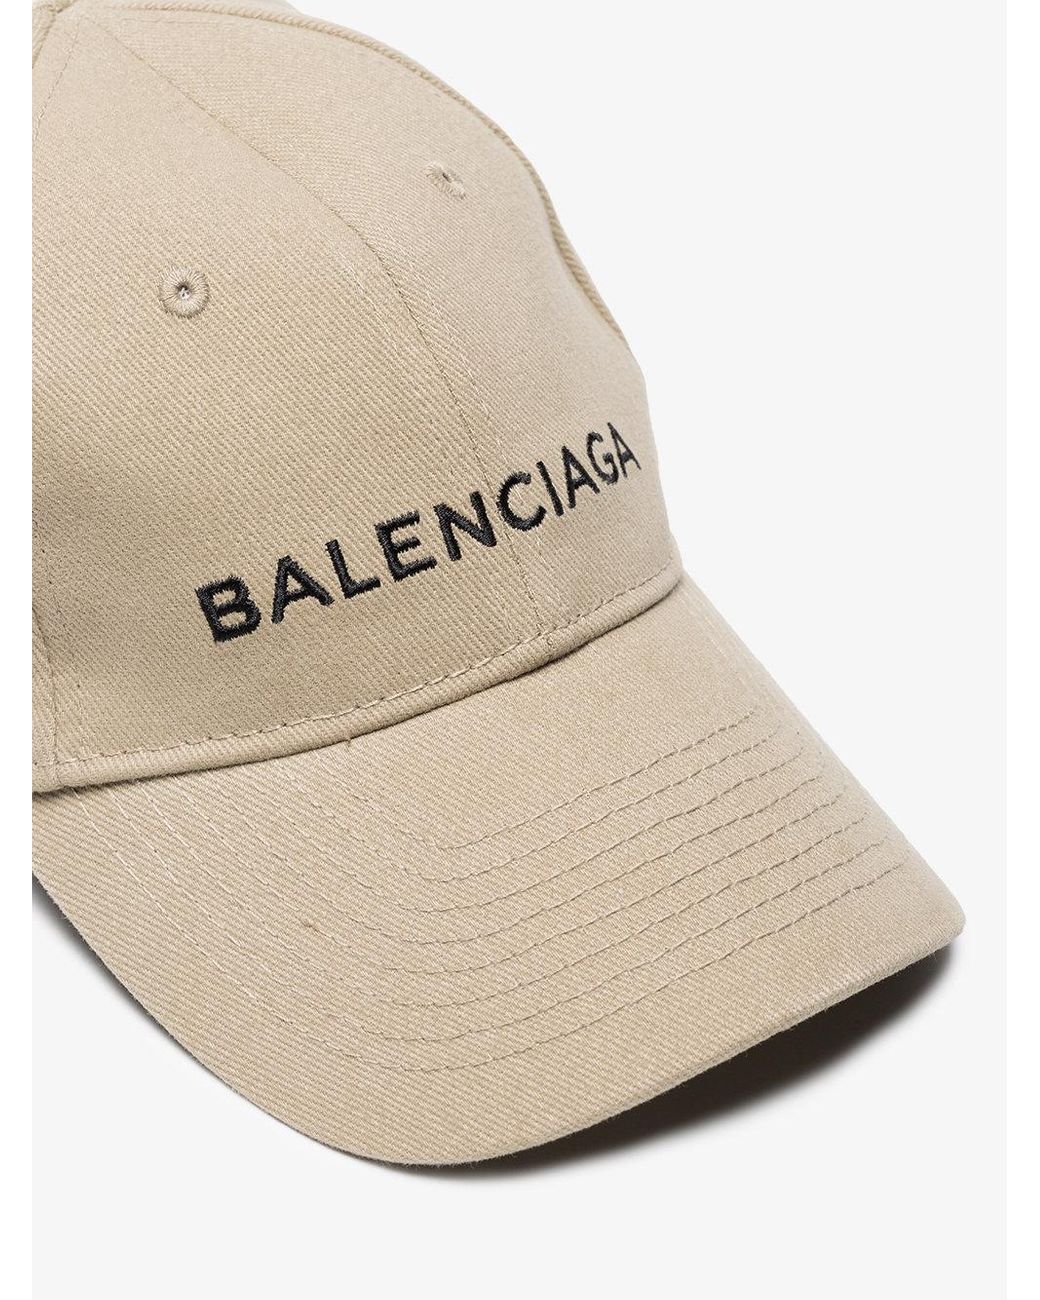 Objector Baron klar Balenciaga Beige Logo Cap in Natural | Lyst